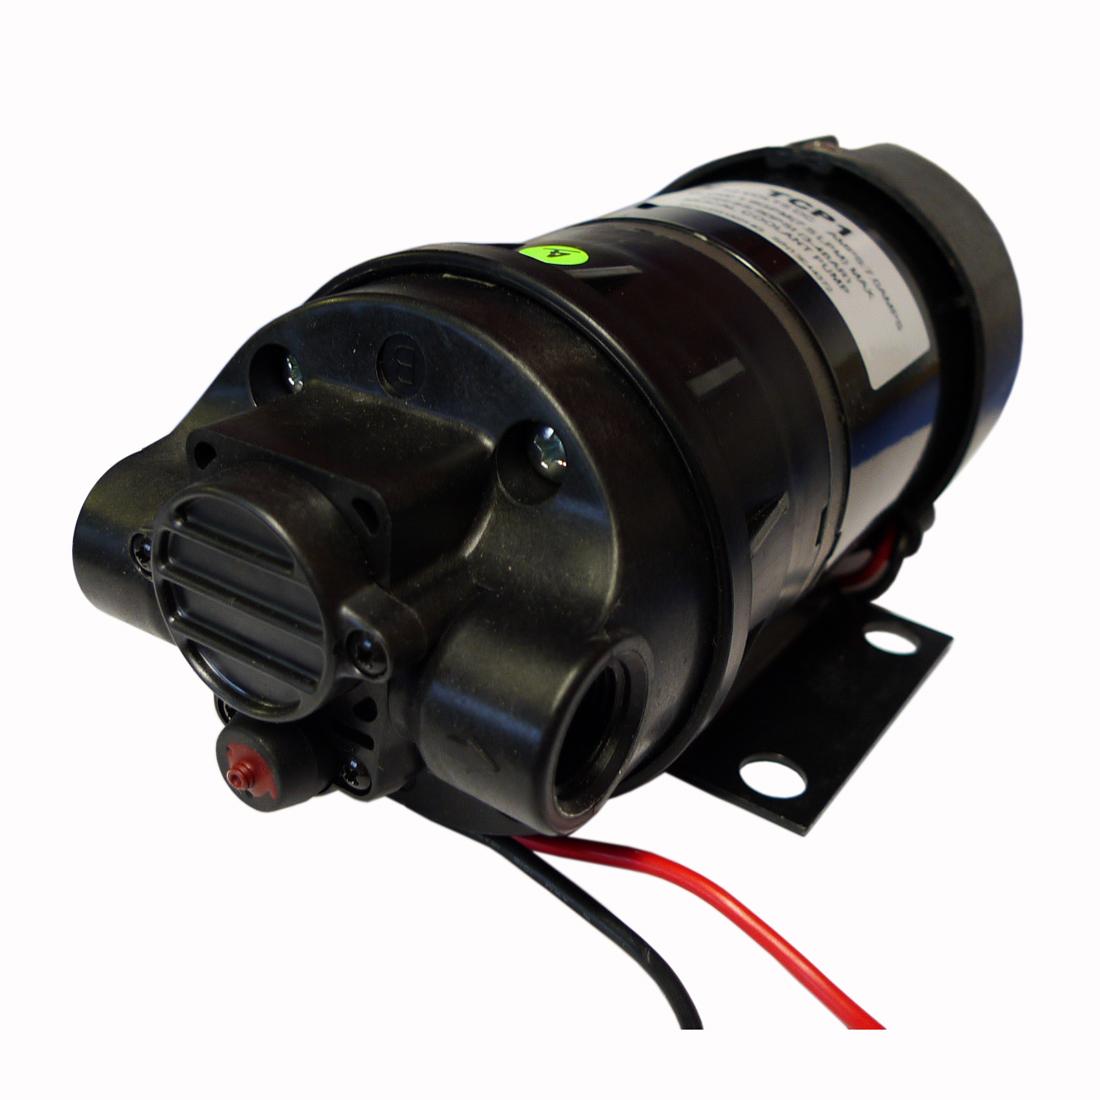 Mocal Electric Oil Pump from Merlin Motorsport